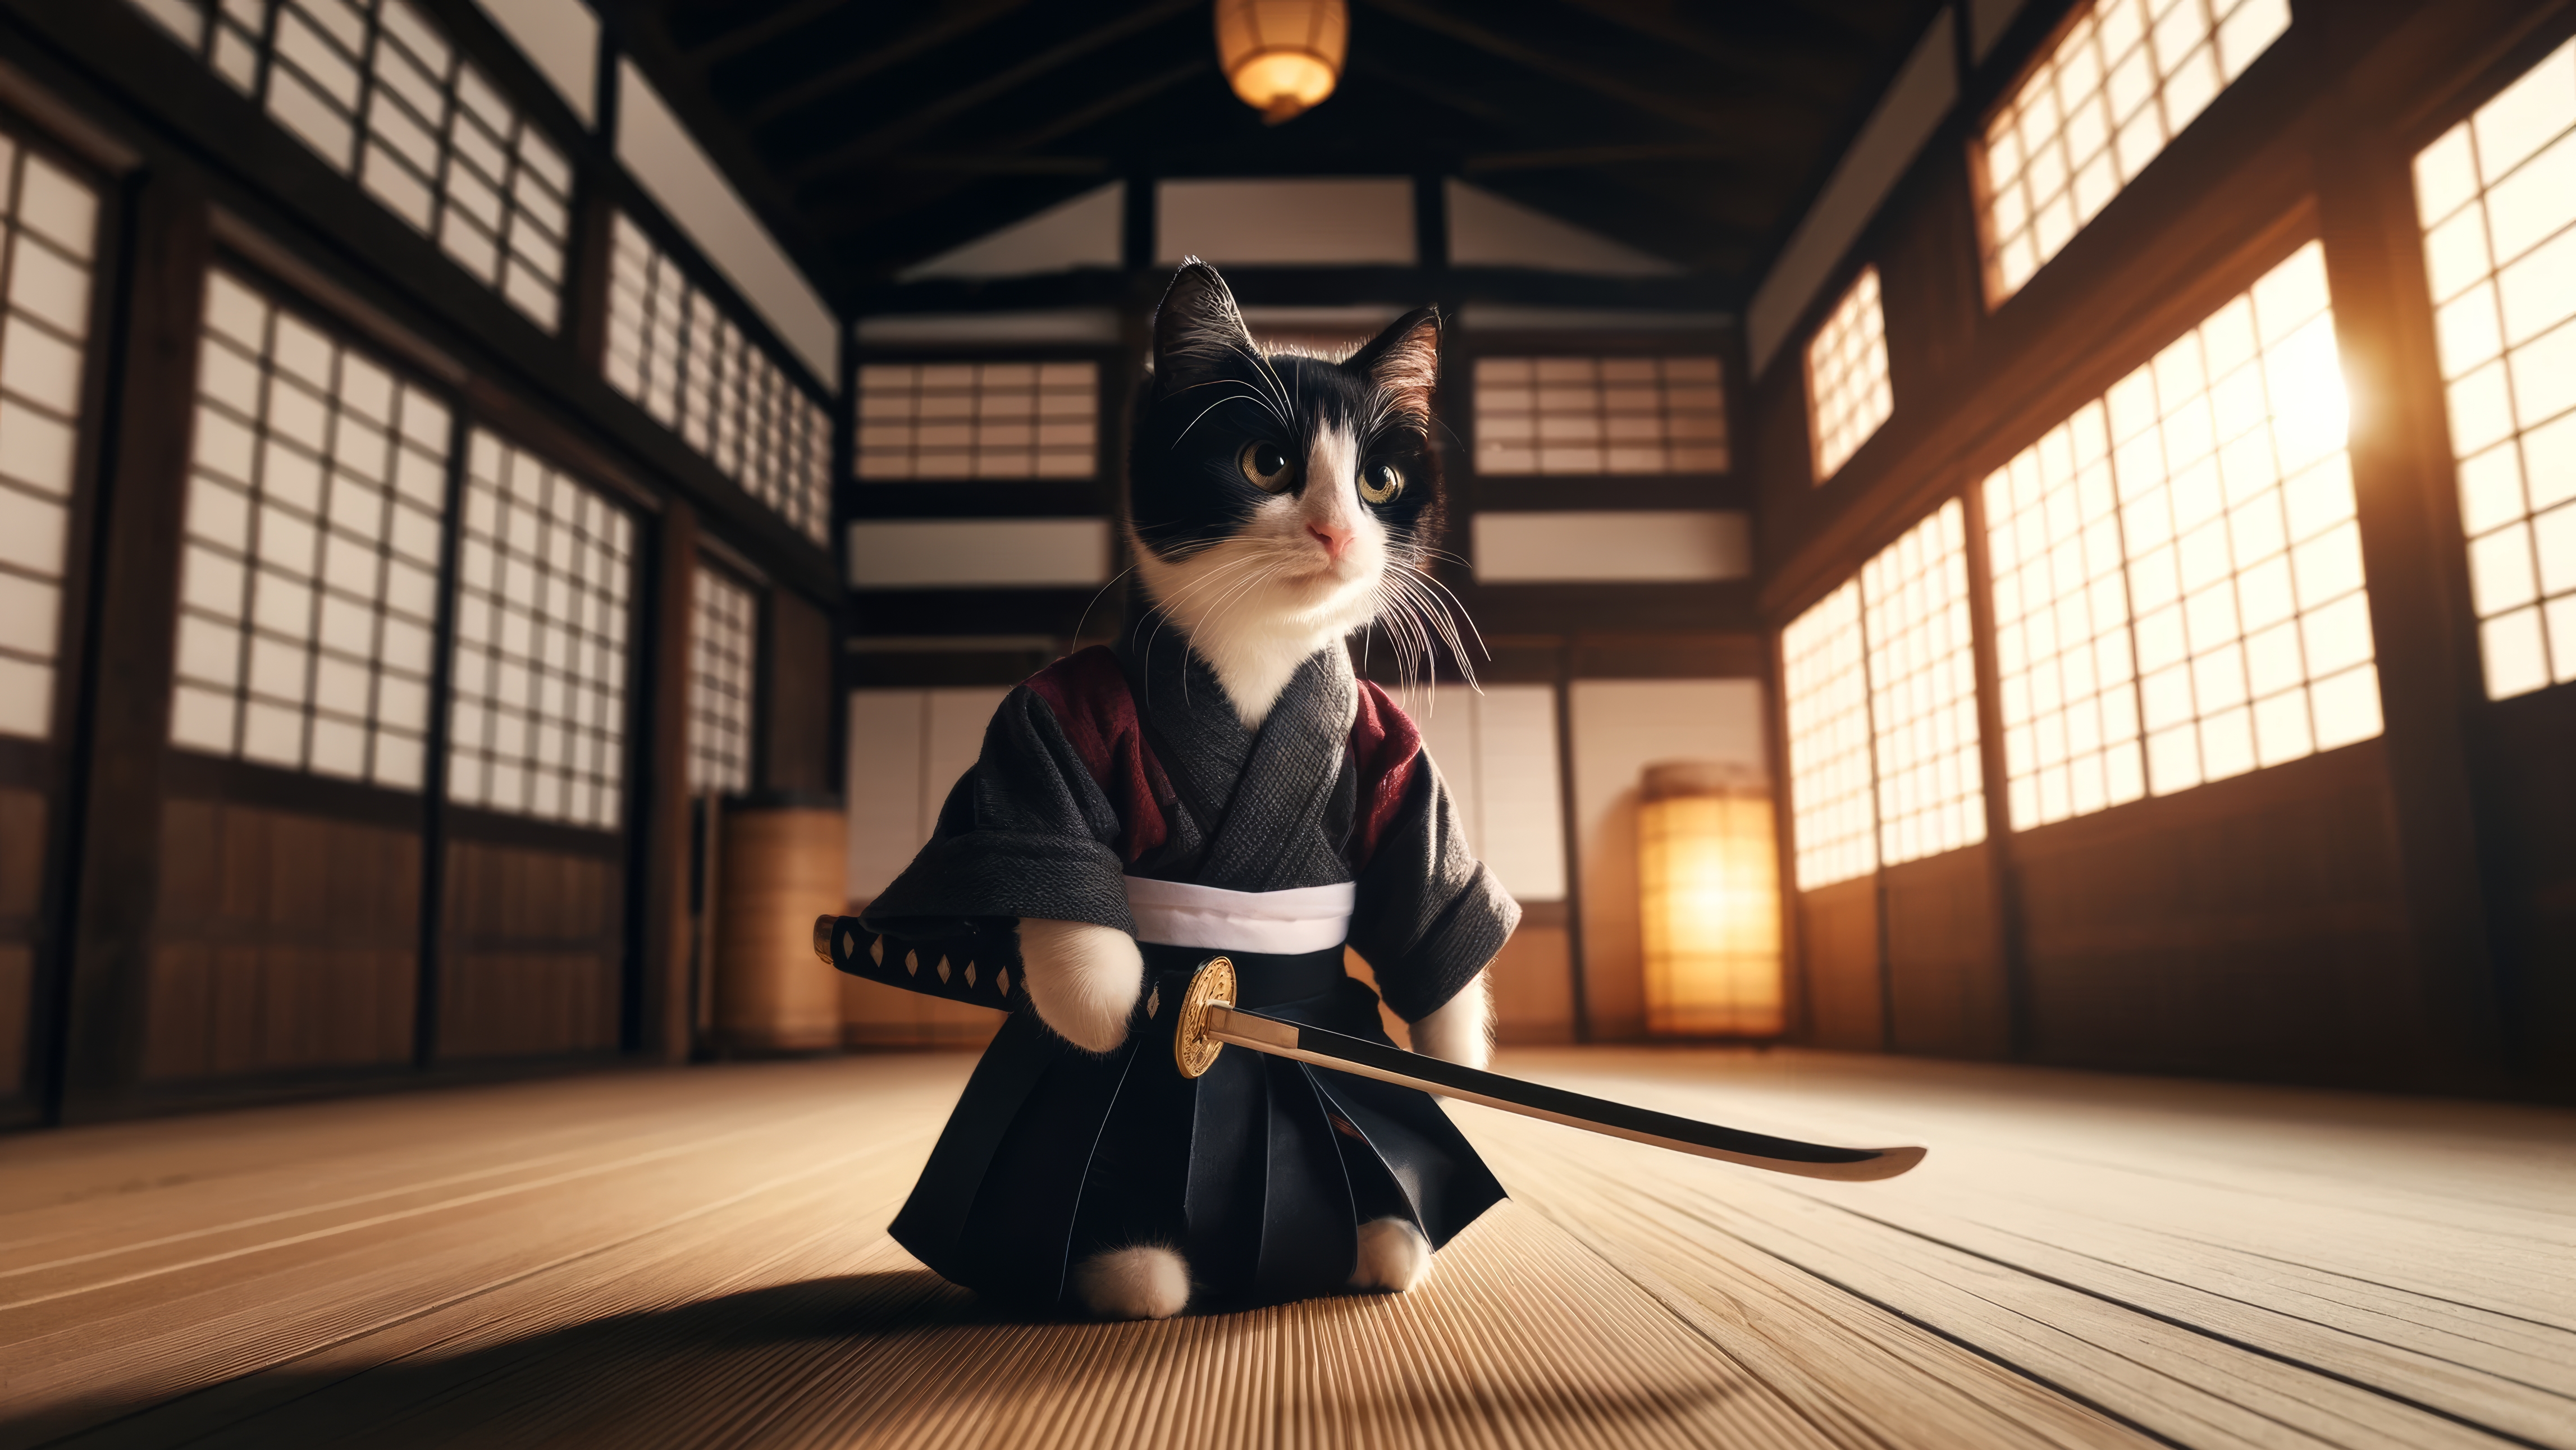 General 4588x2583 AI art cats sword dojo samurai katana